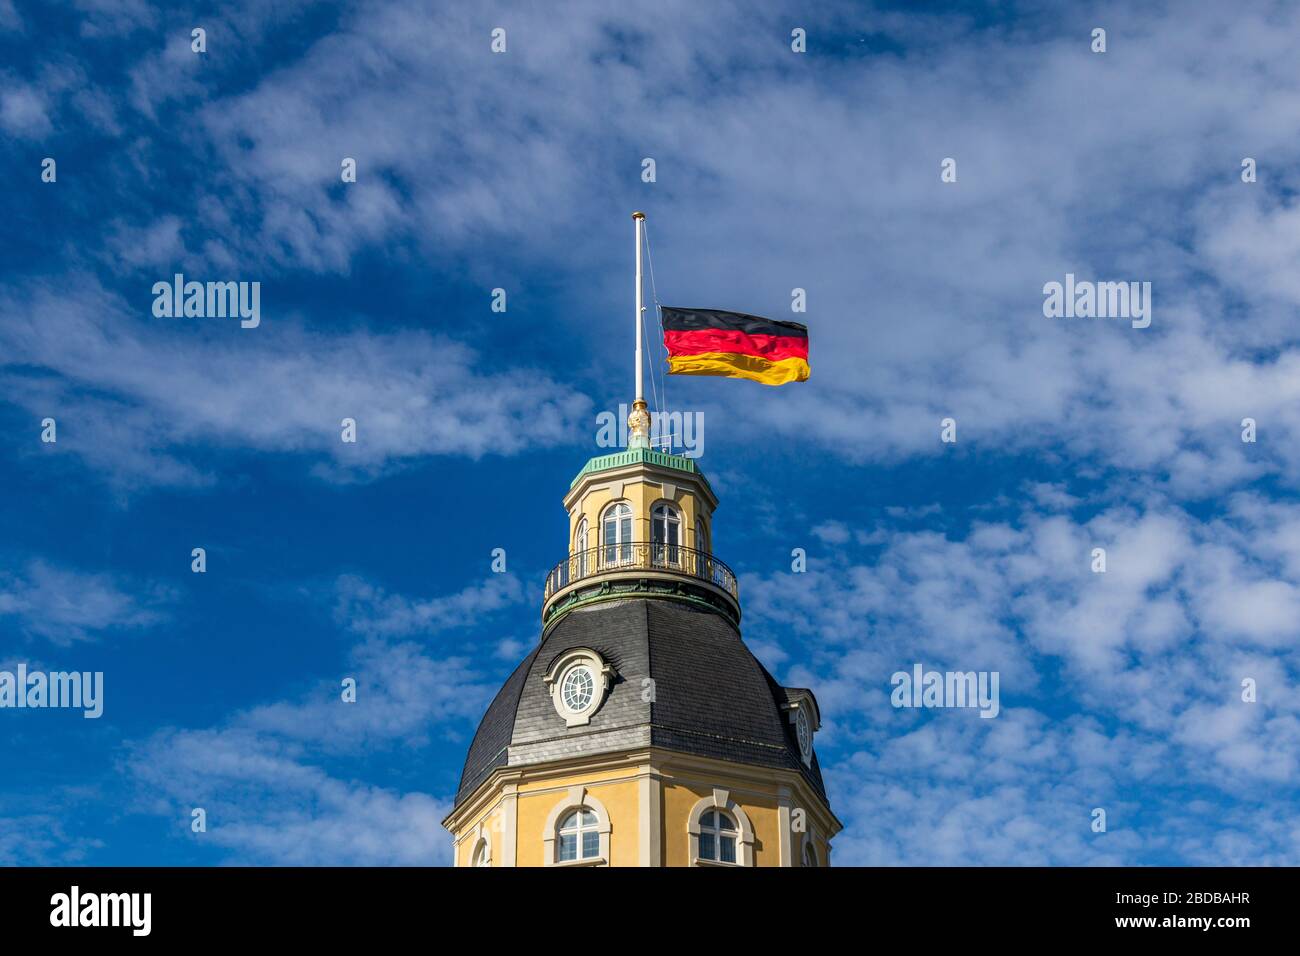 Bandiera tedesca a Halfmast, auf Halbmast, sul tetto della torre del Castello Karlsruhe, cielo blu dietro. A Baden-Württemberg, Germania Foto Stock